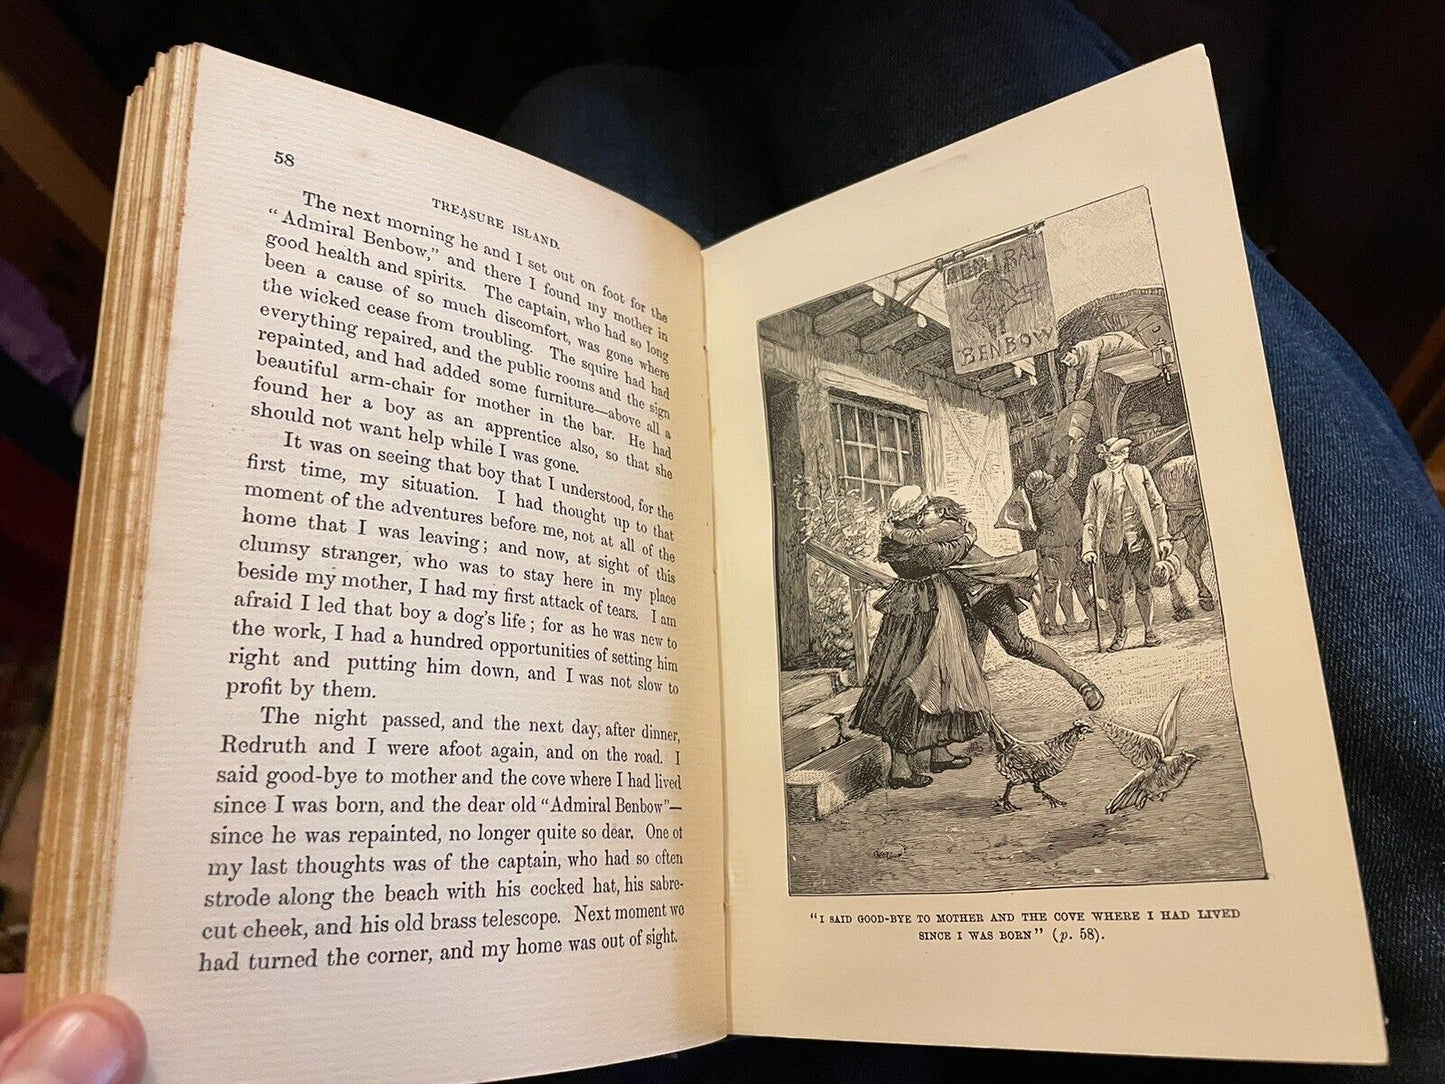 TREASURE ISLAND Robert Louis Stevenson ILLUSTRATED EDITION 1899 : Great Copy